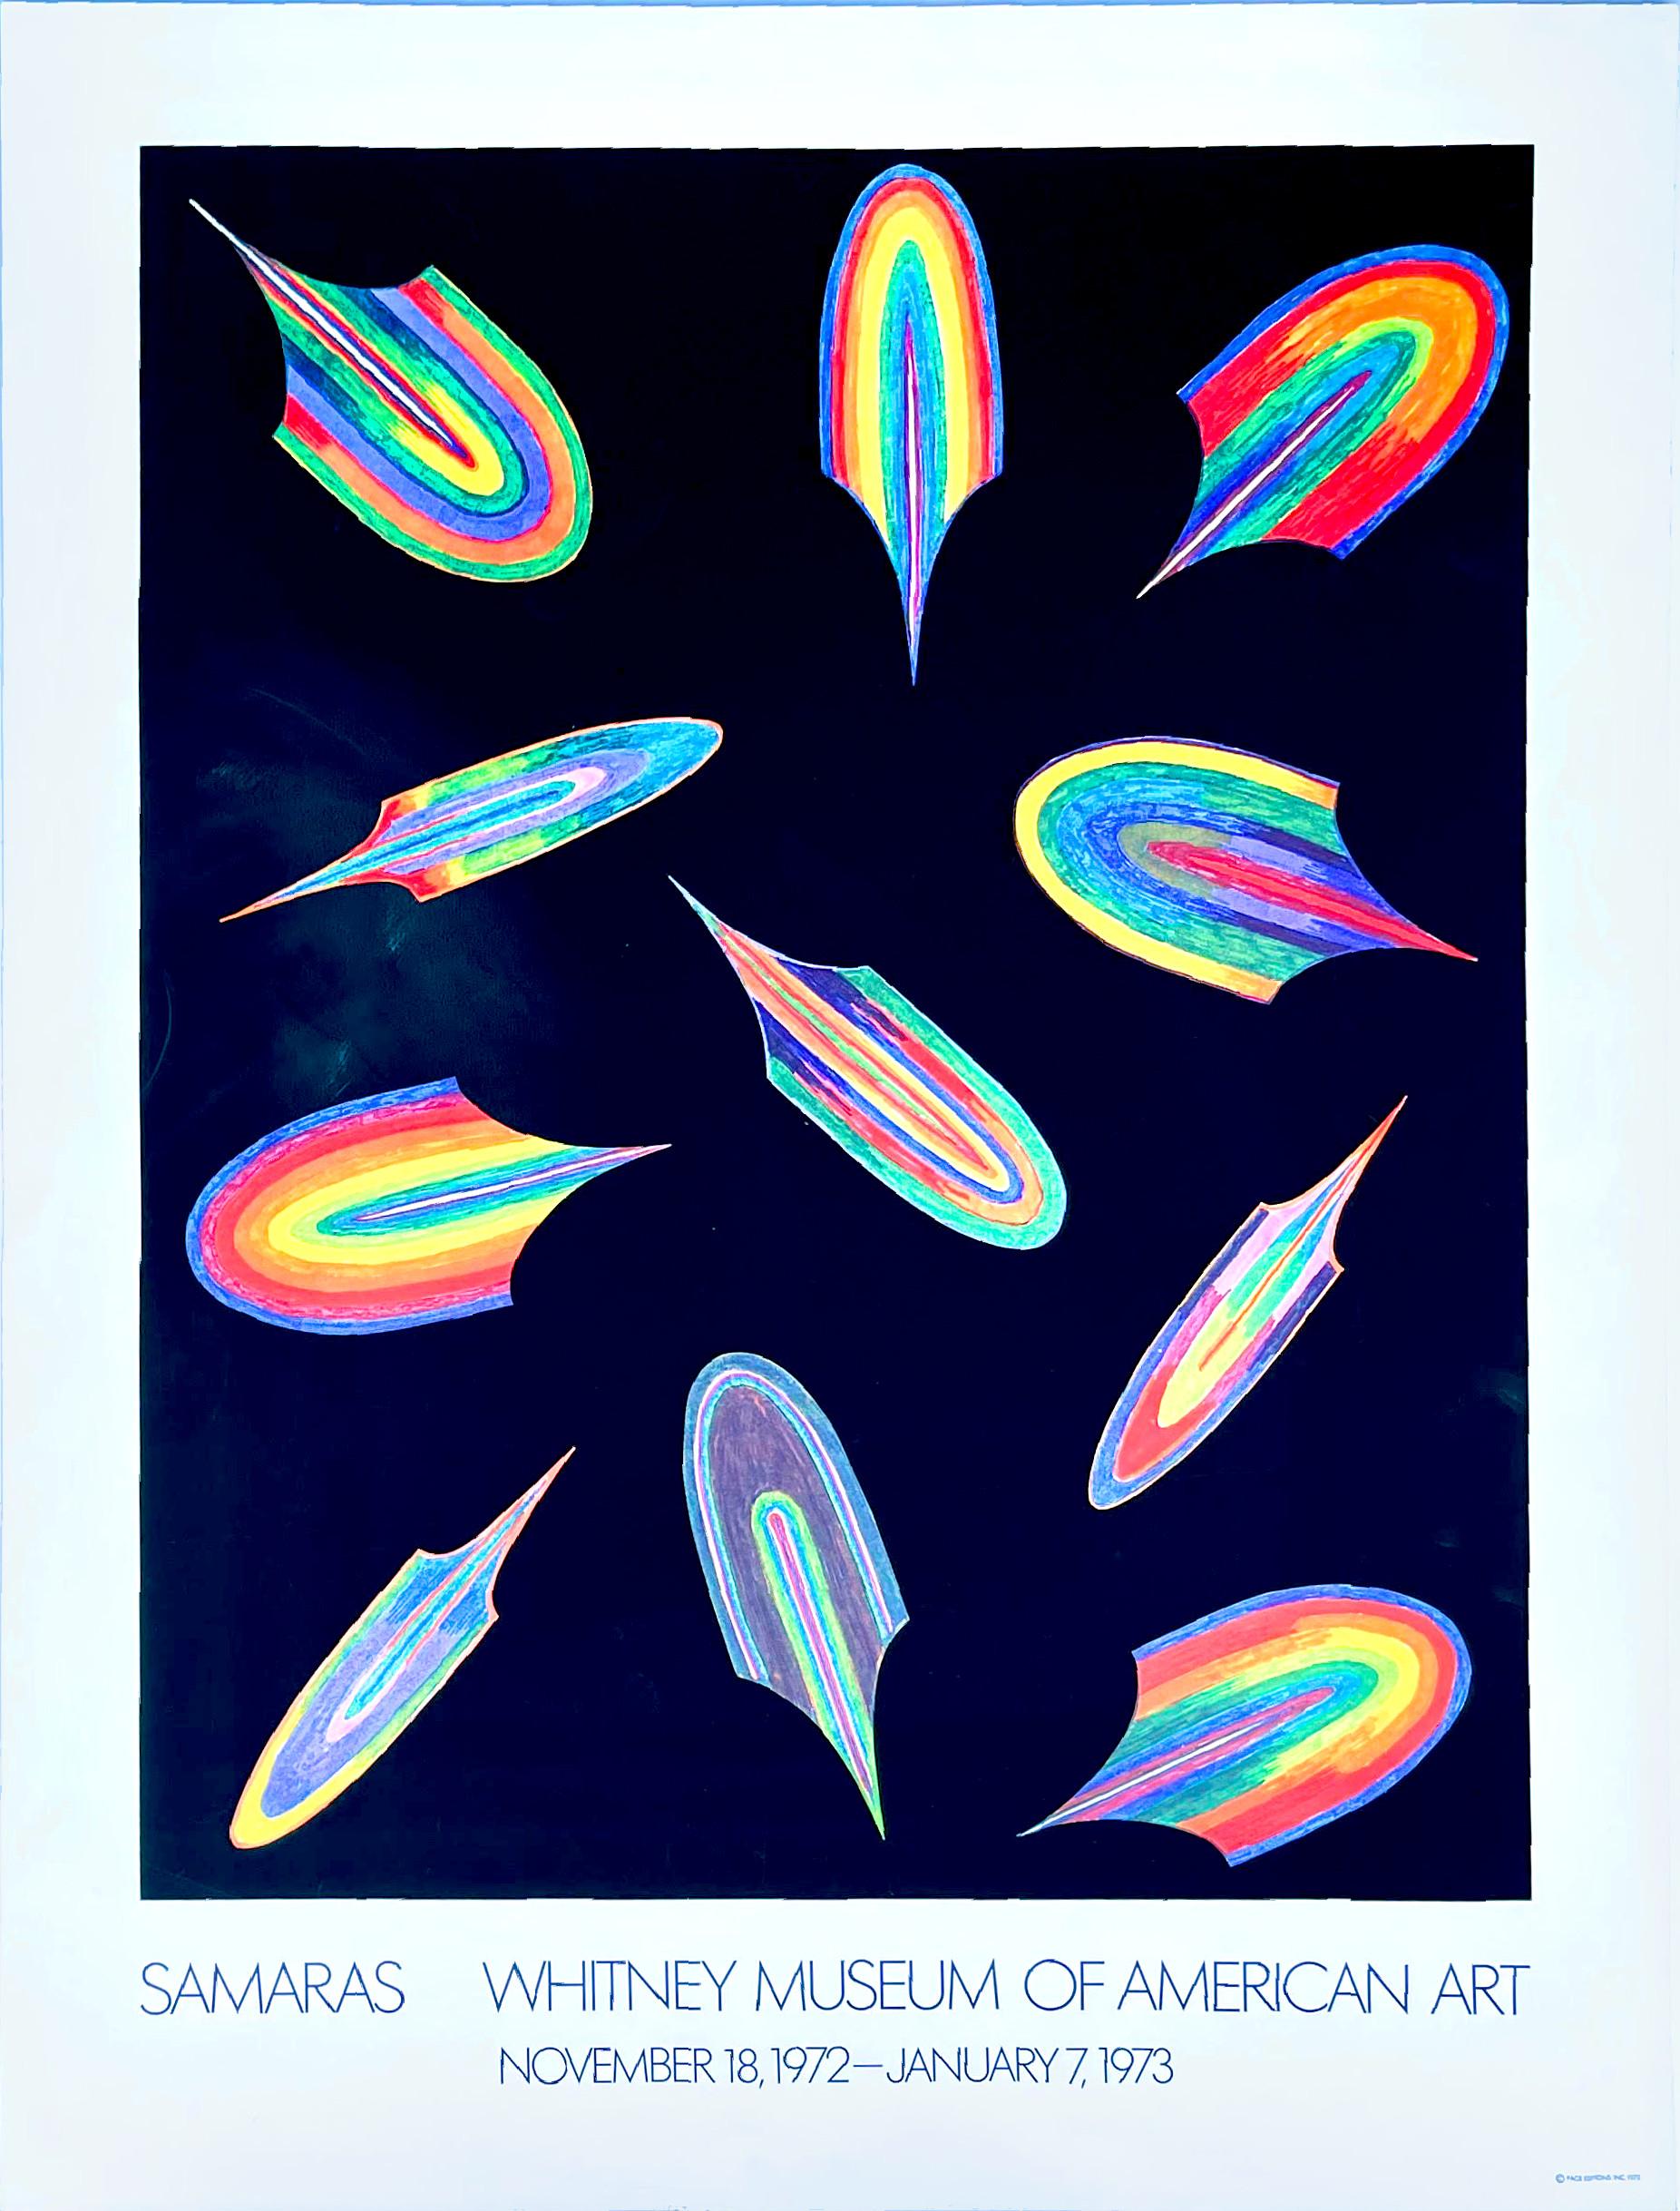 Samaras at Whitney Museum of American Art Exhibition Poster - Print by Lucas Samaras